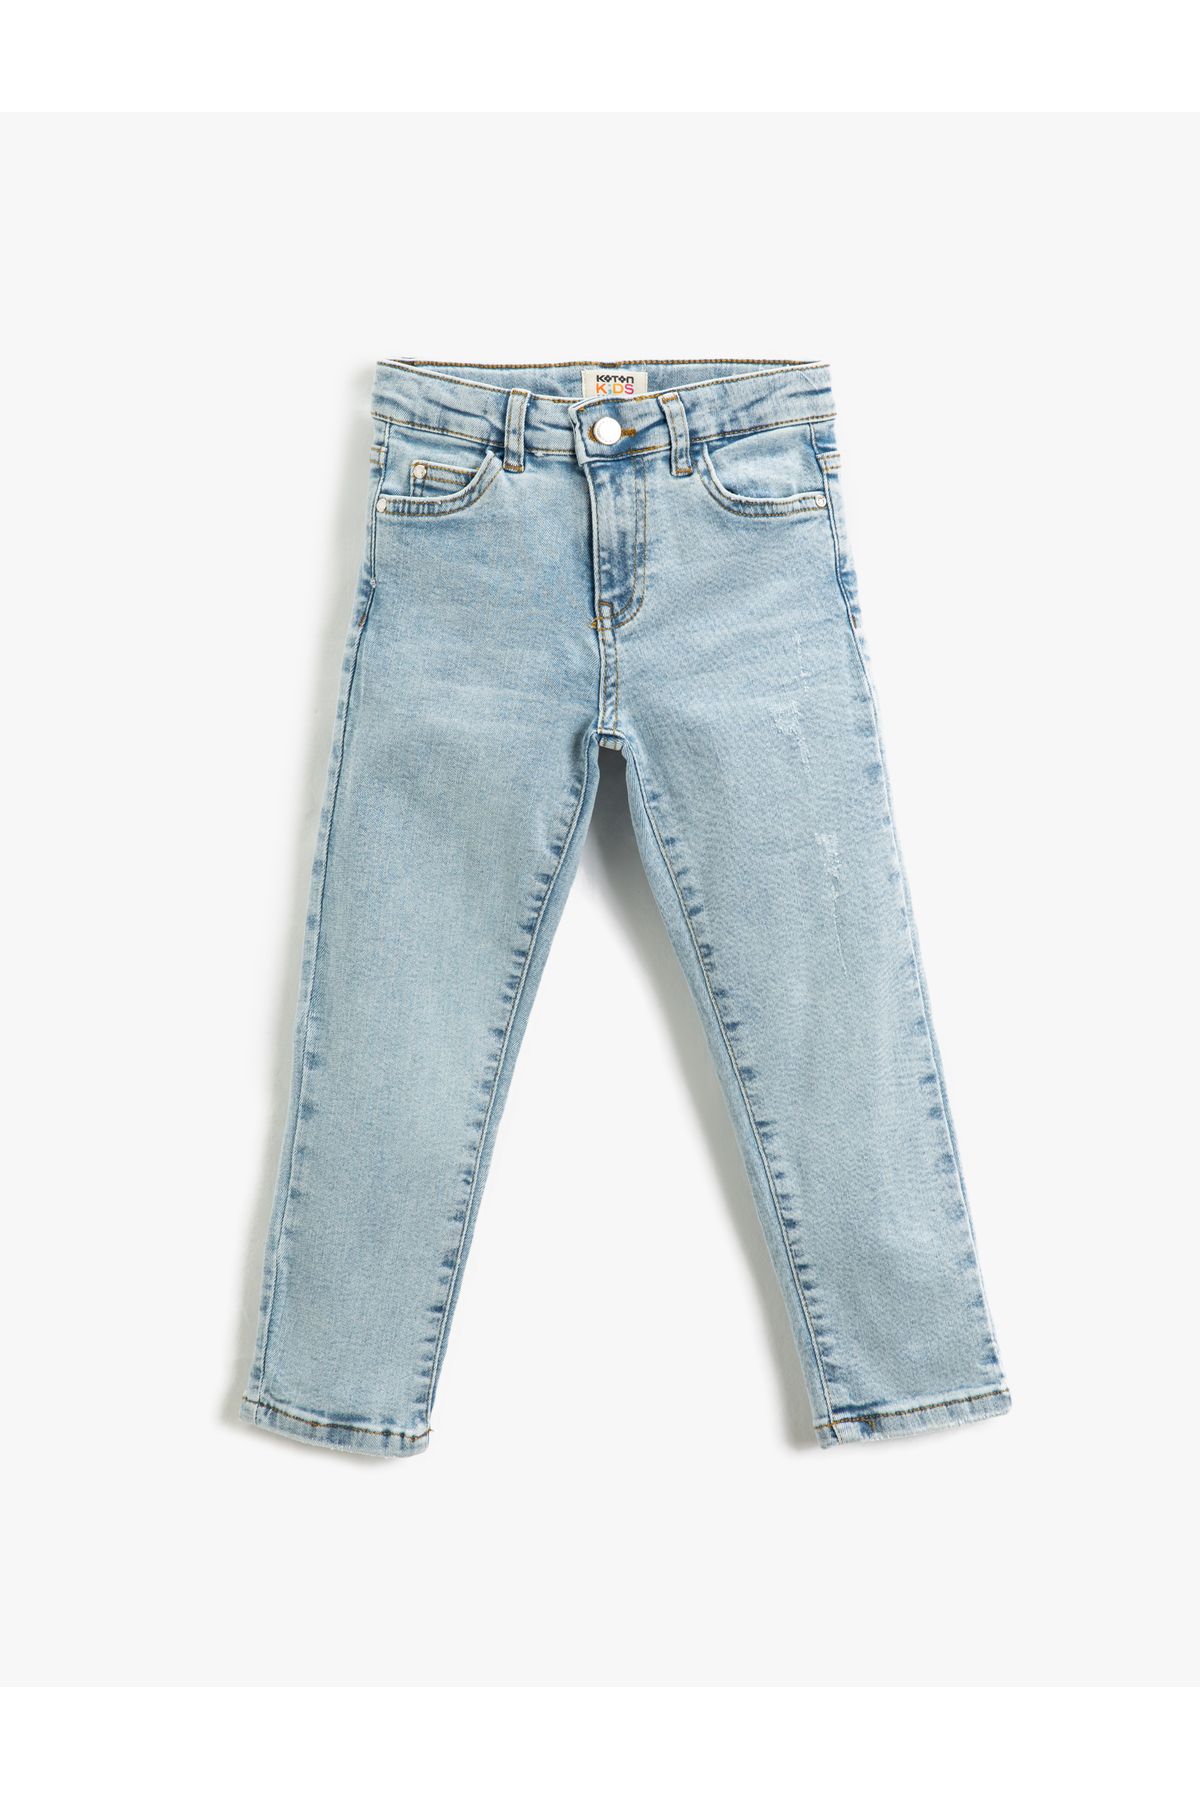 Koton شلوار جین ساق راست کمر معمولی نخی - صاف با الاستیک قابل تنظیم